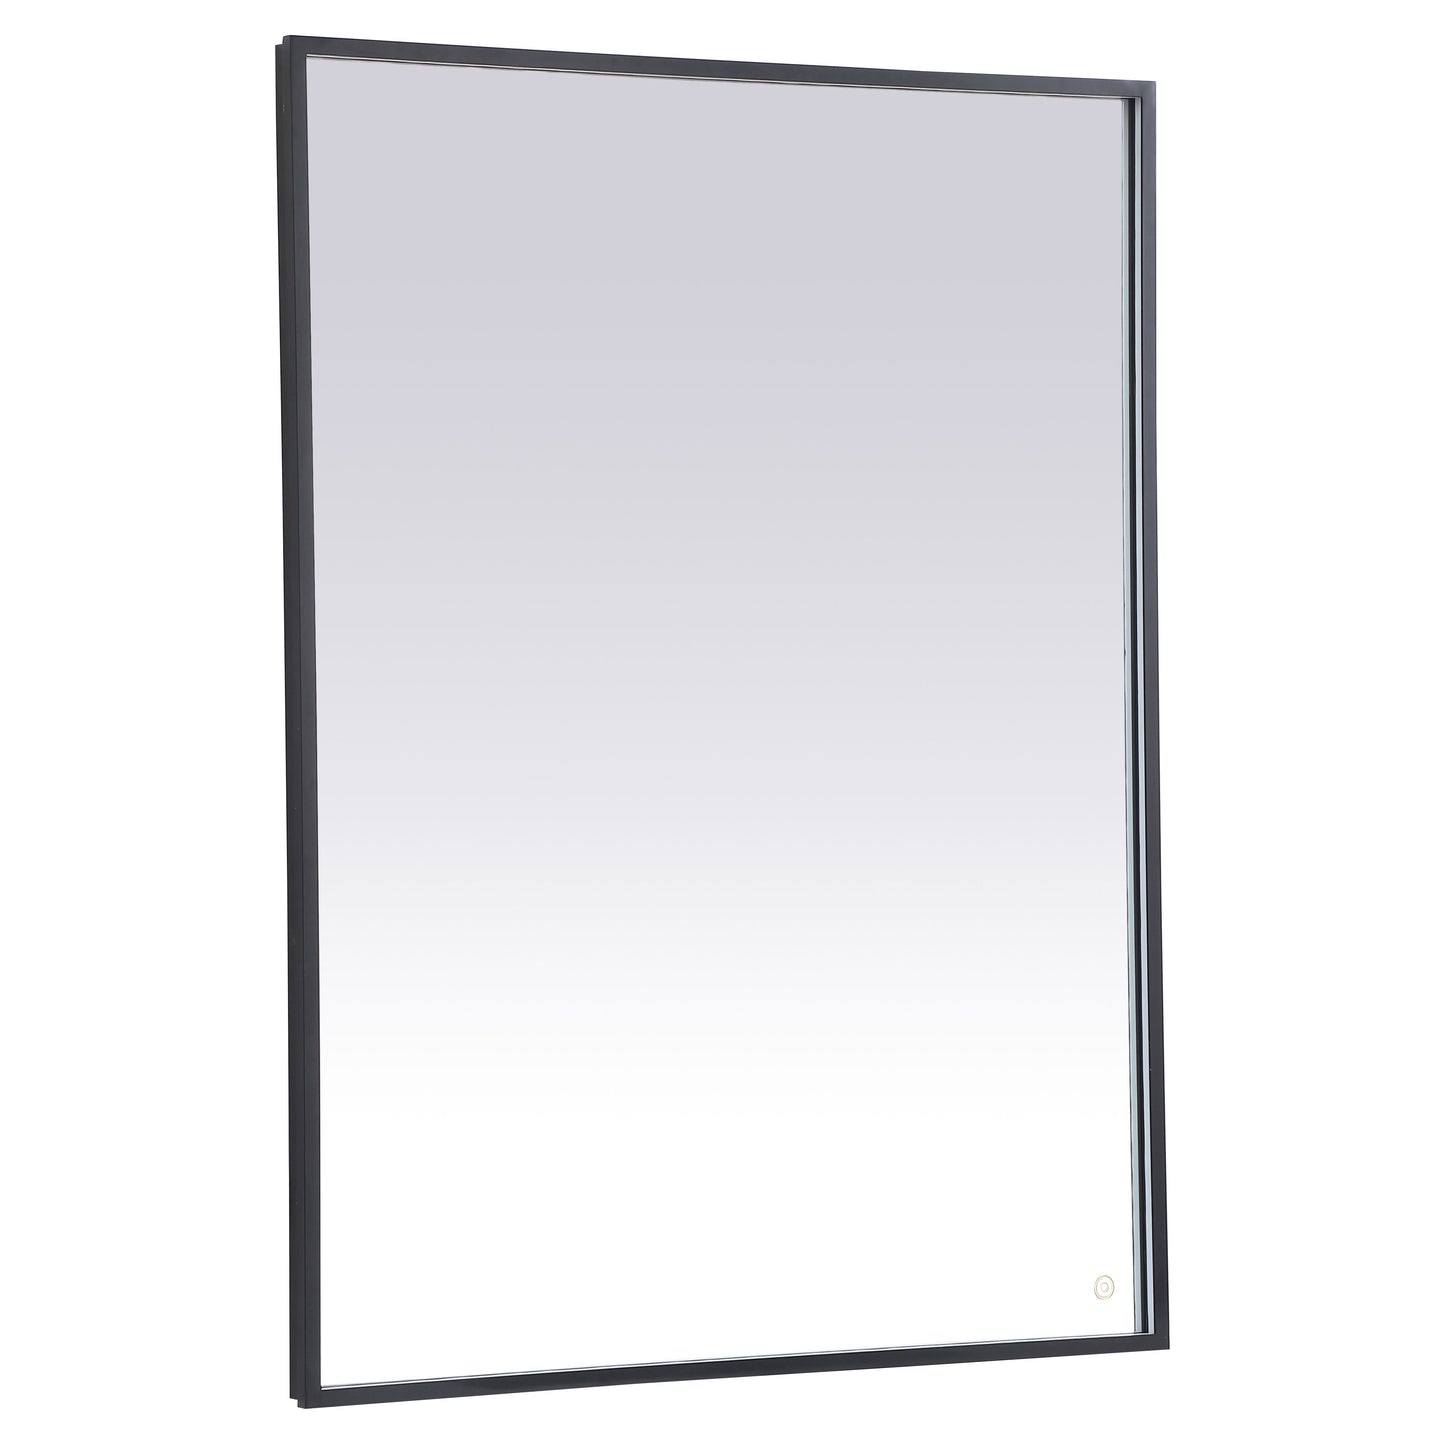 MRE63648BK Pier 48" x 36" LED Mirror in Black - Adjustable Color Temp